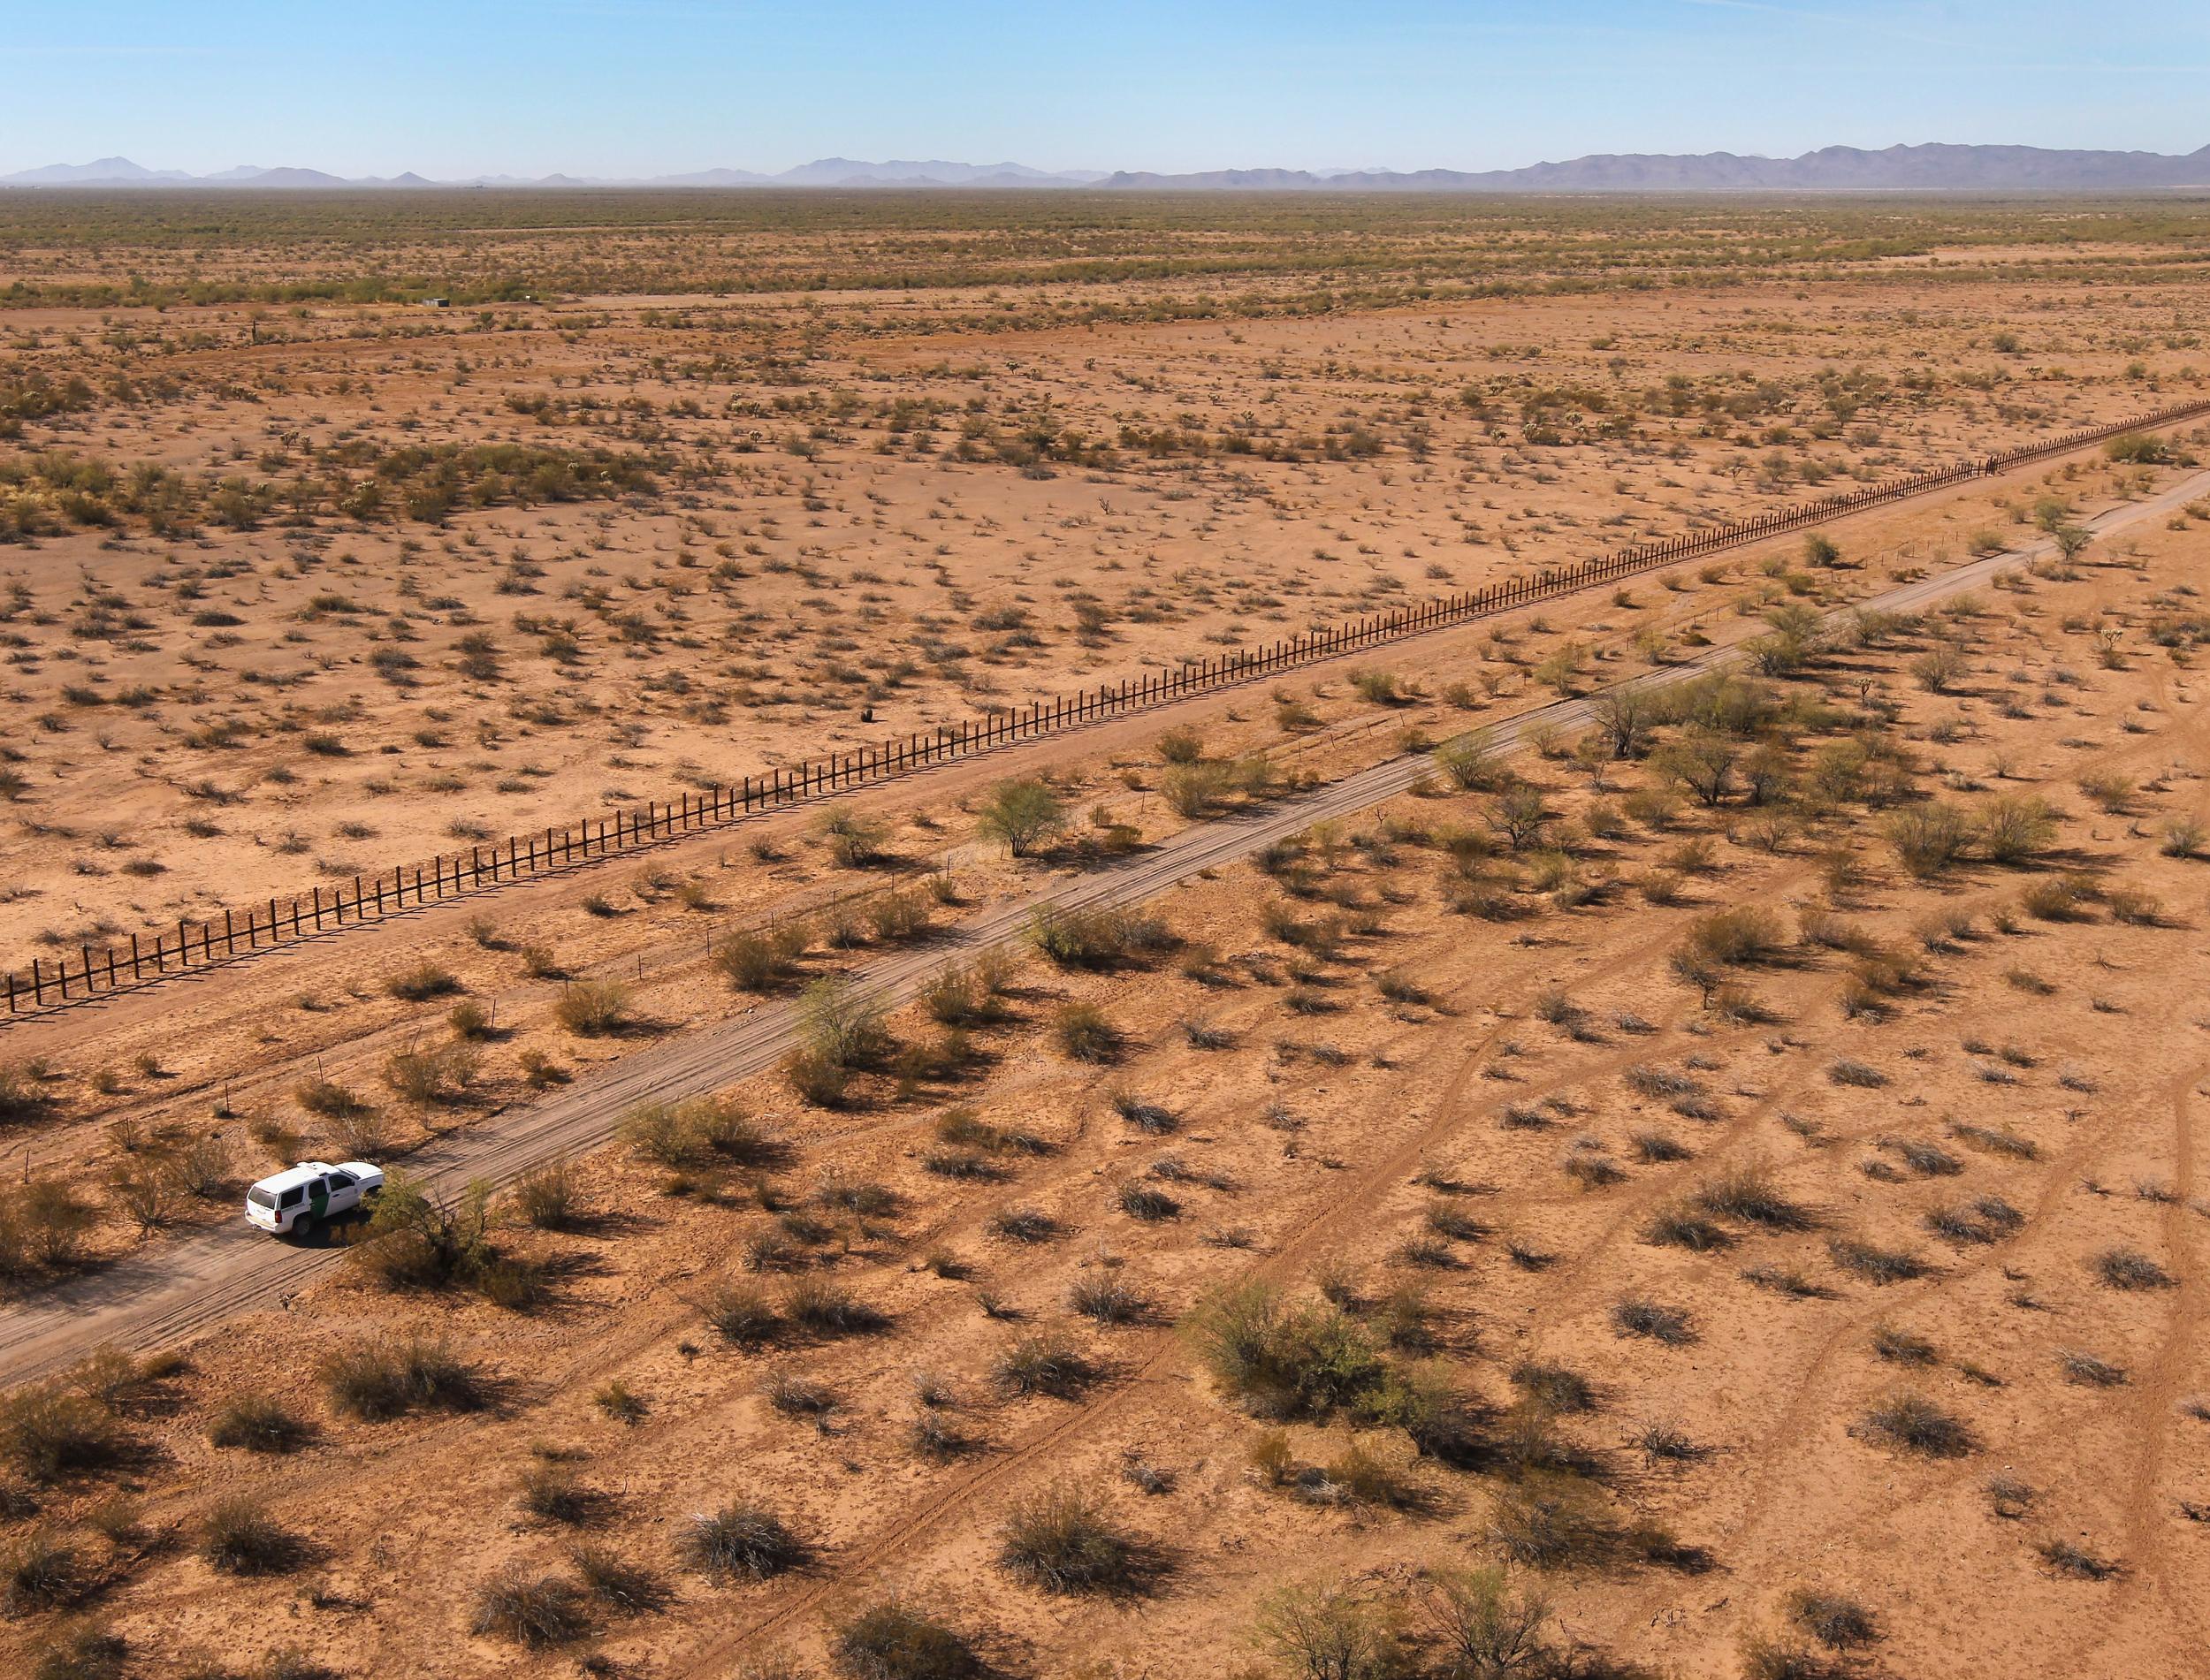 Border Patrol agents drive along the US-Mexico border fence in the Tohono O'odham Reservation, Arizona